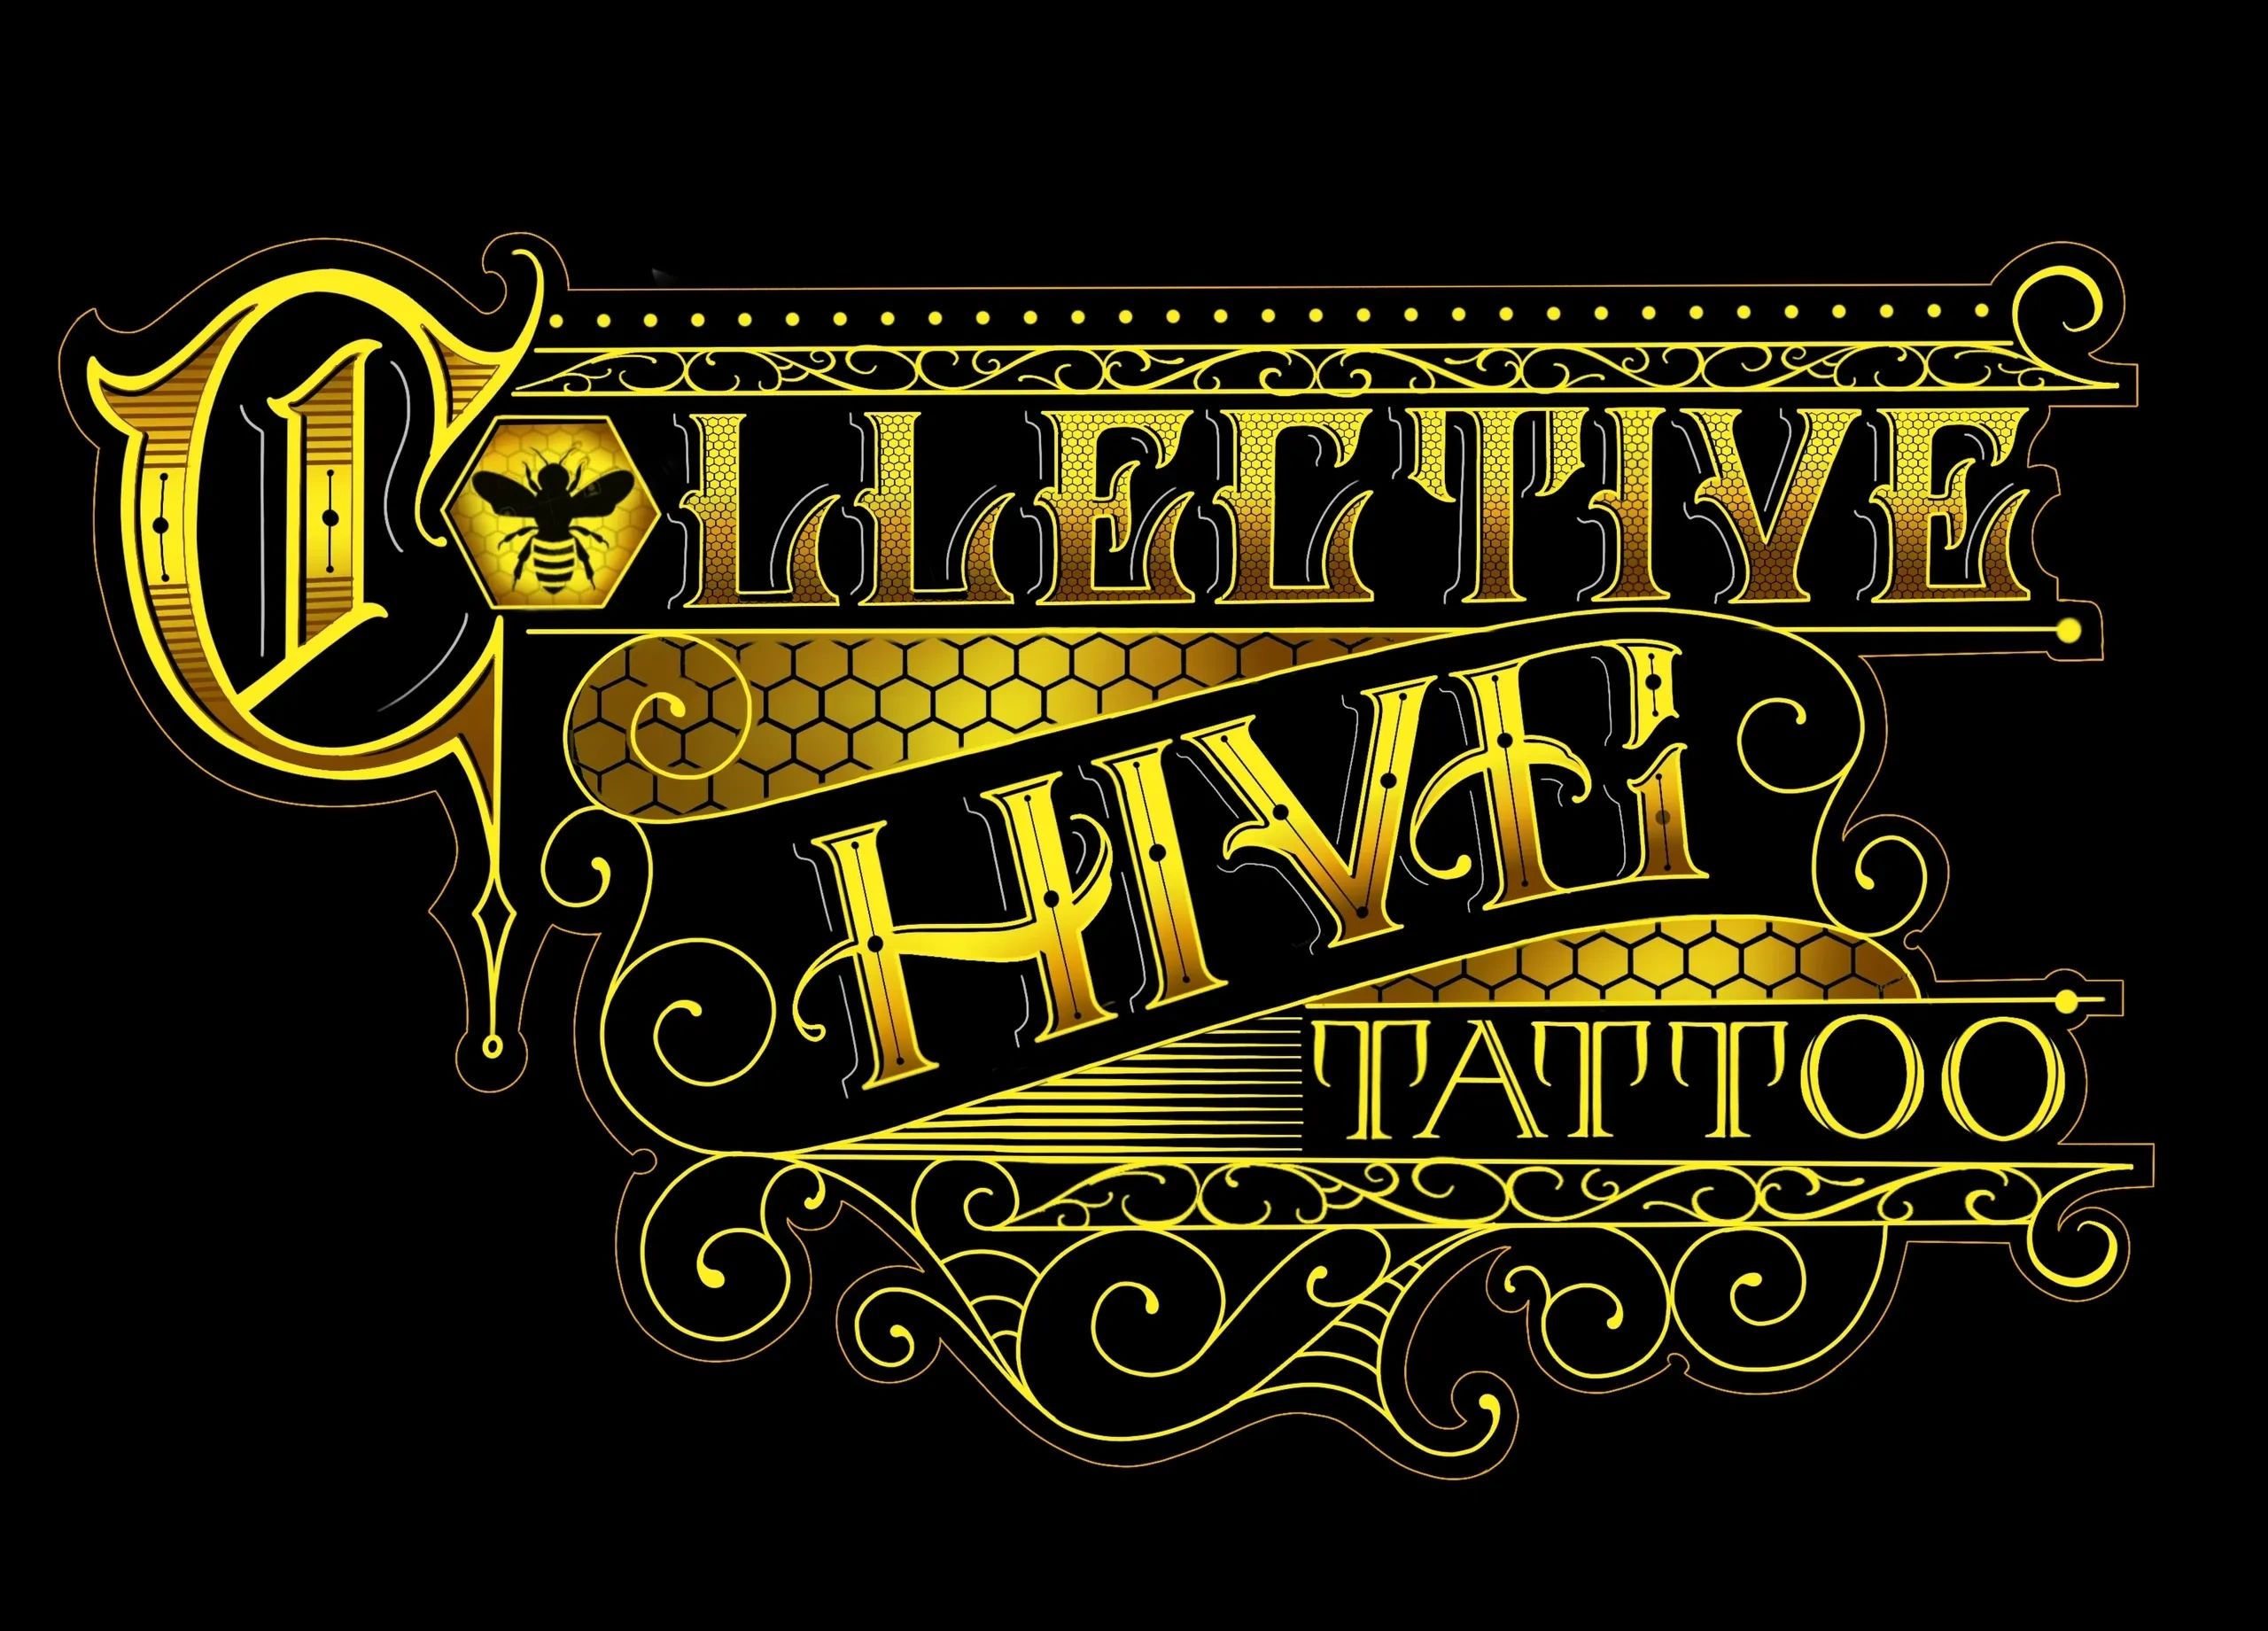 Black Hive Tattoo  Custom Only Tattoo Studio  Jacksonville FL